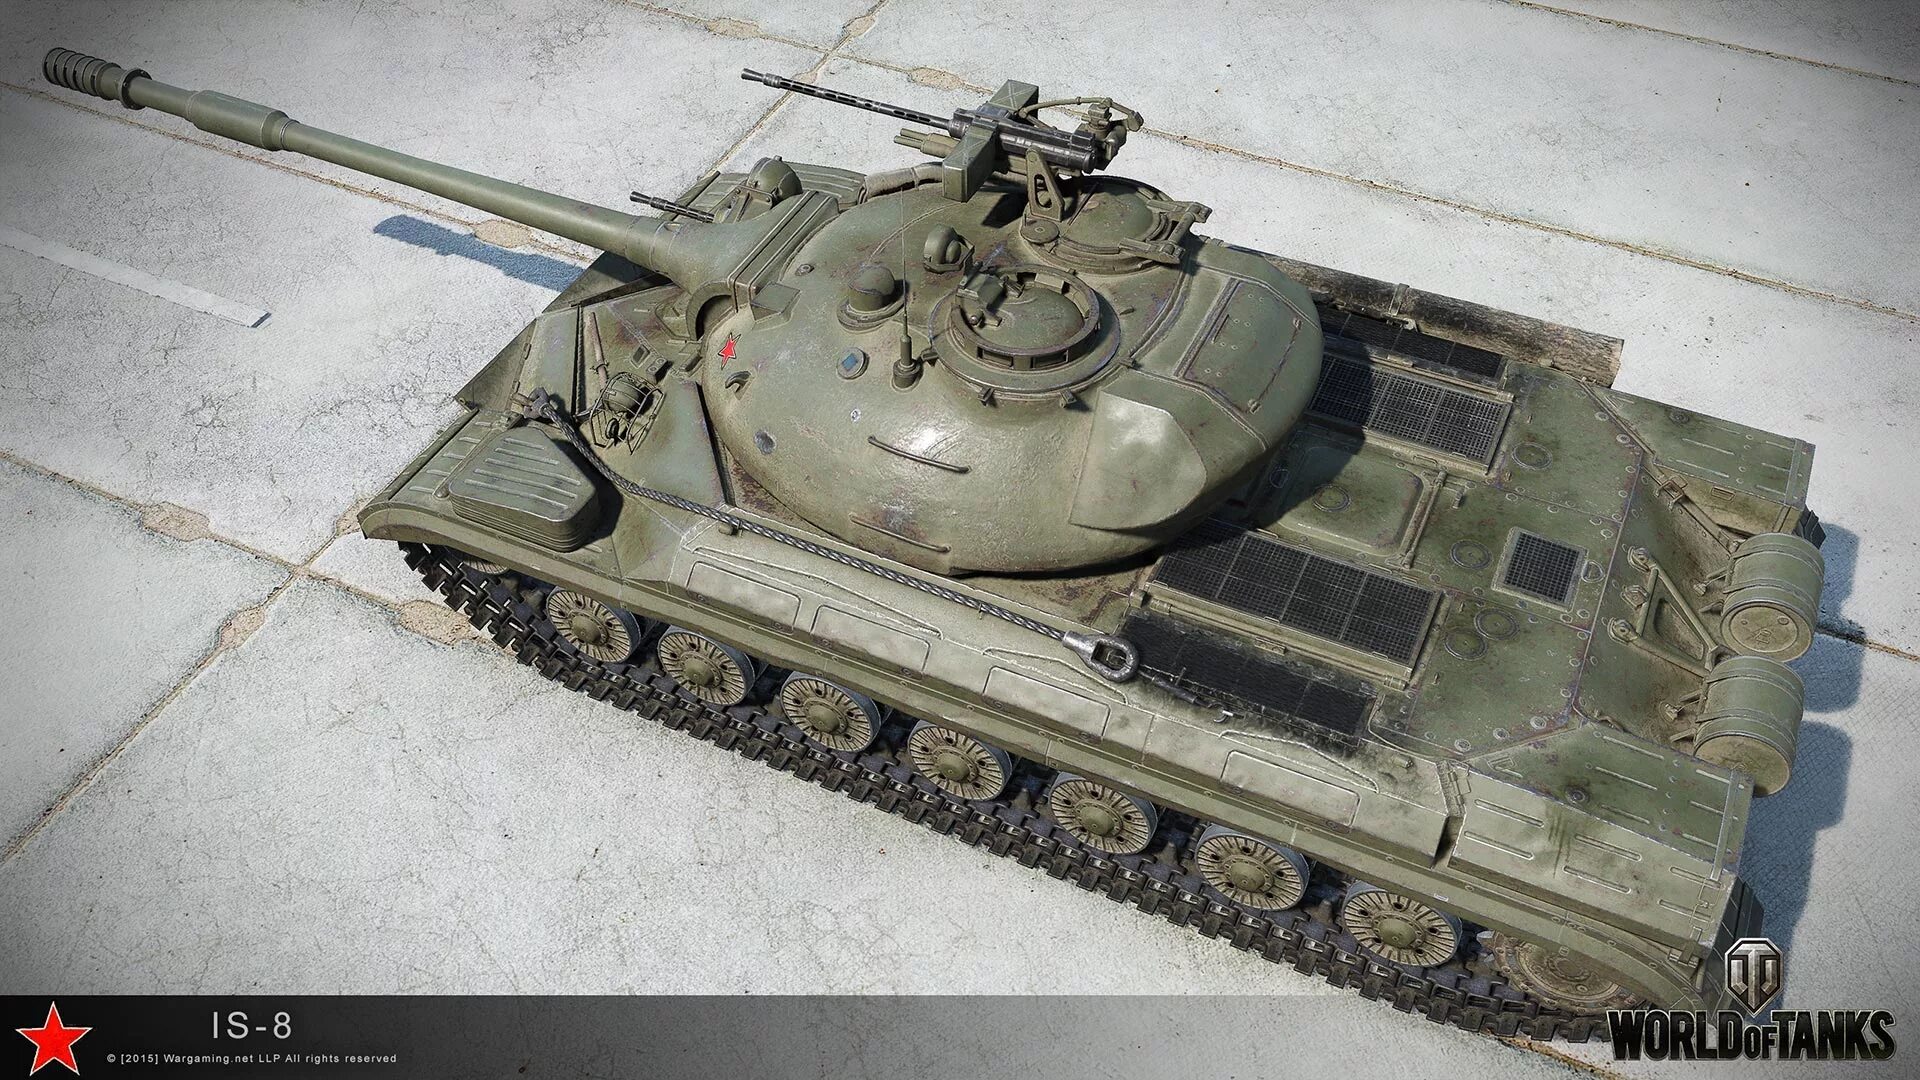 Танк ИС 8. Т-10 танк СССР. Тяжелый танк т-10 (ИС-8). ИС-8 танк WOT. Исе 56